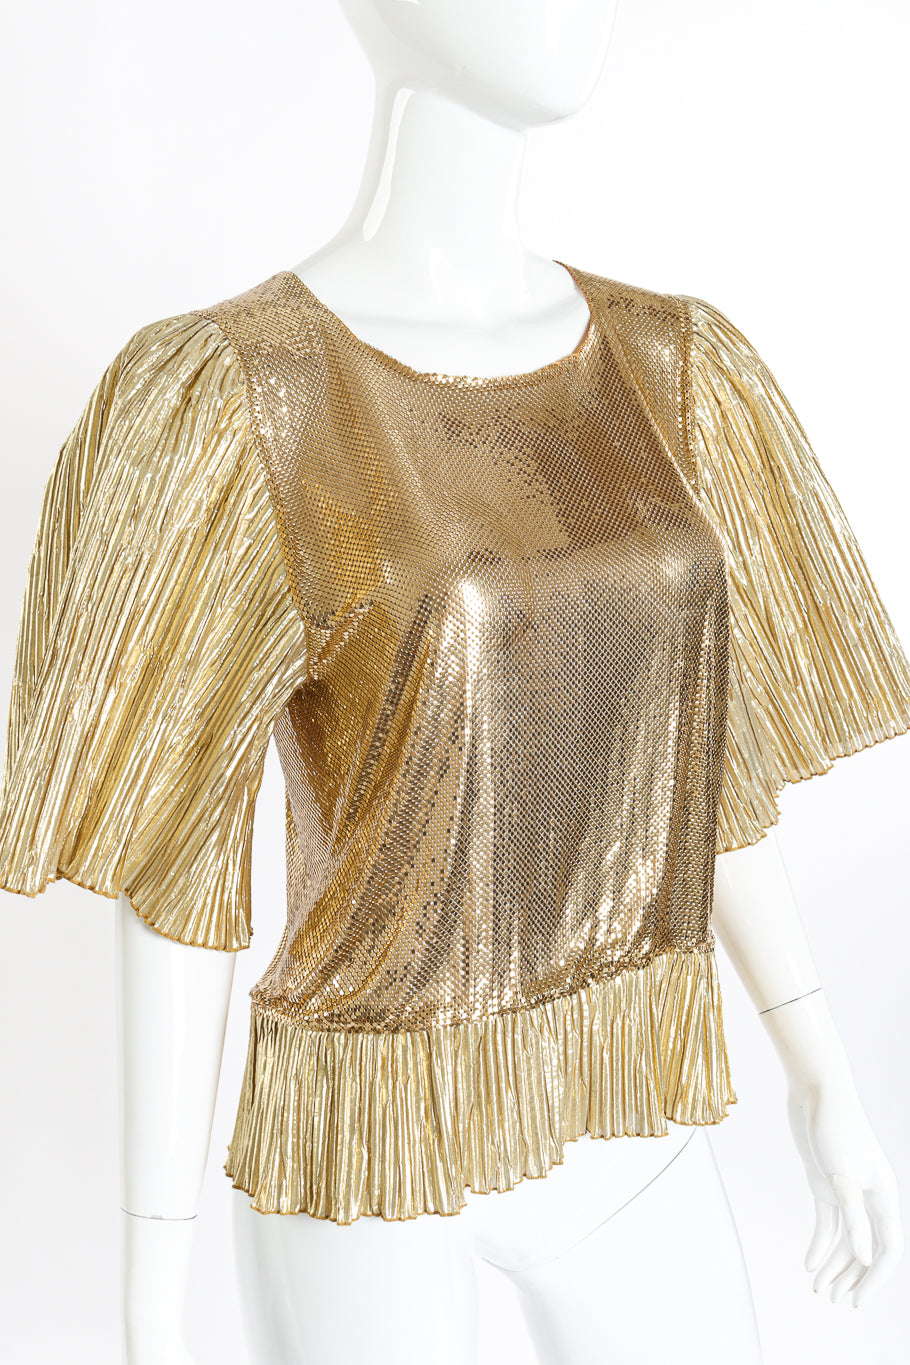 Vintage Whiting & Davis Gold Mesh Box Top II front on mannequin closeup @recessla